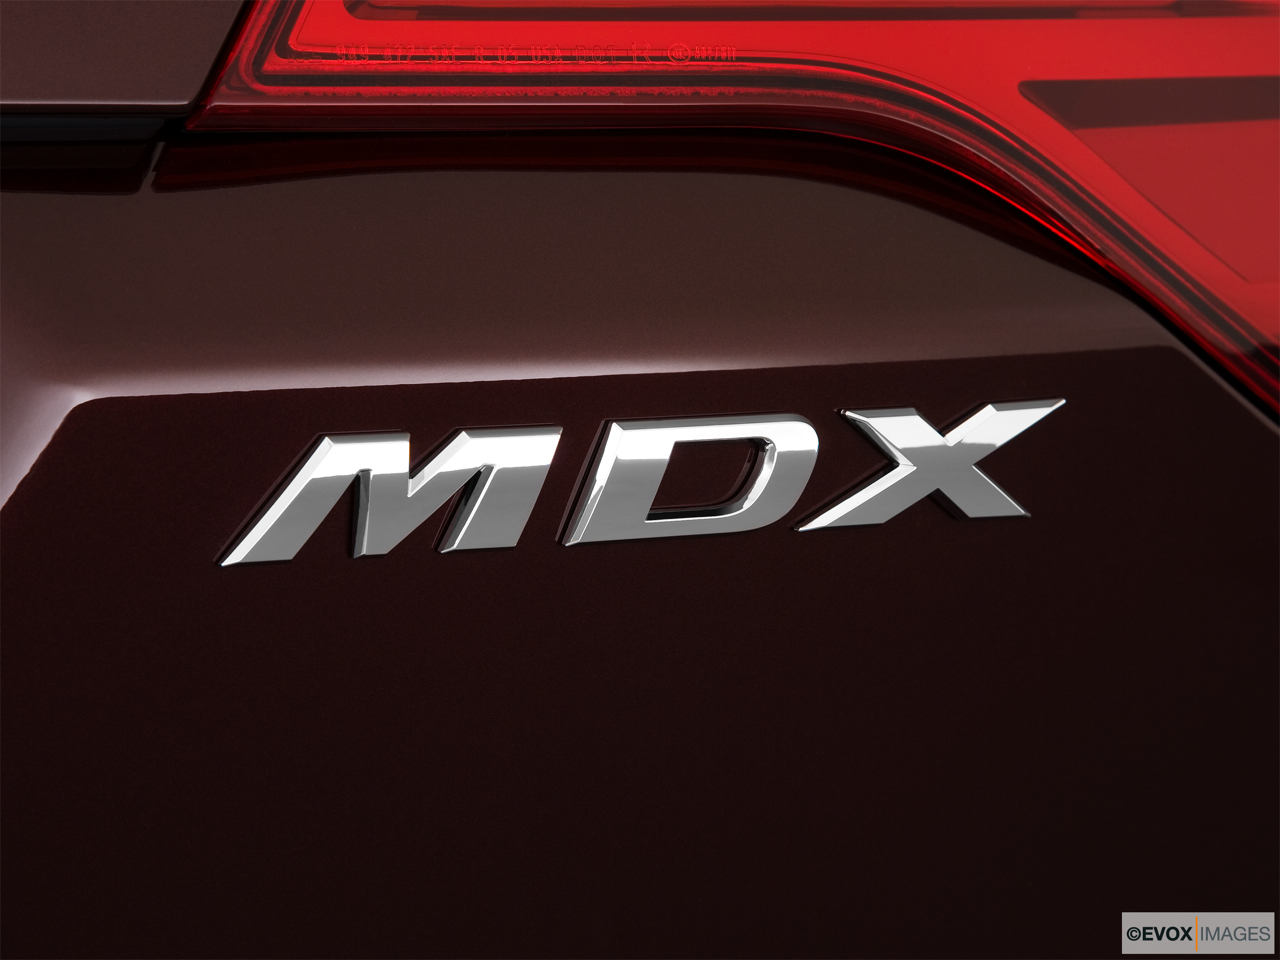 2010 Acura MDX MDX Rear model badge/emblem 